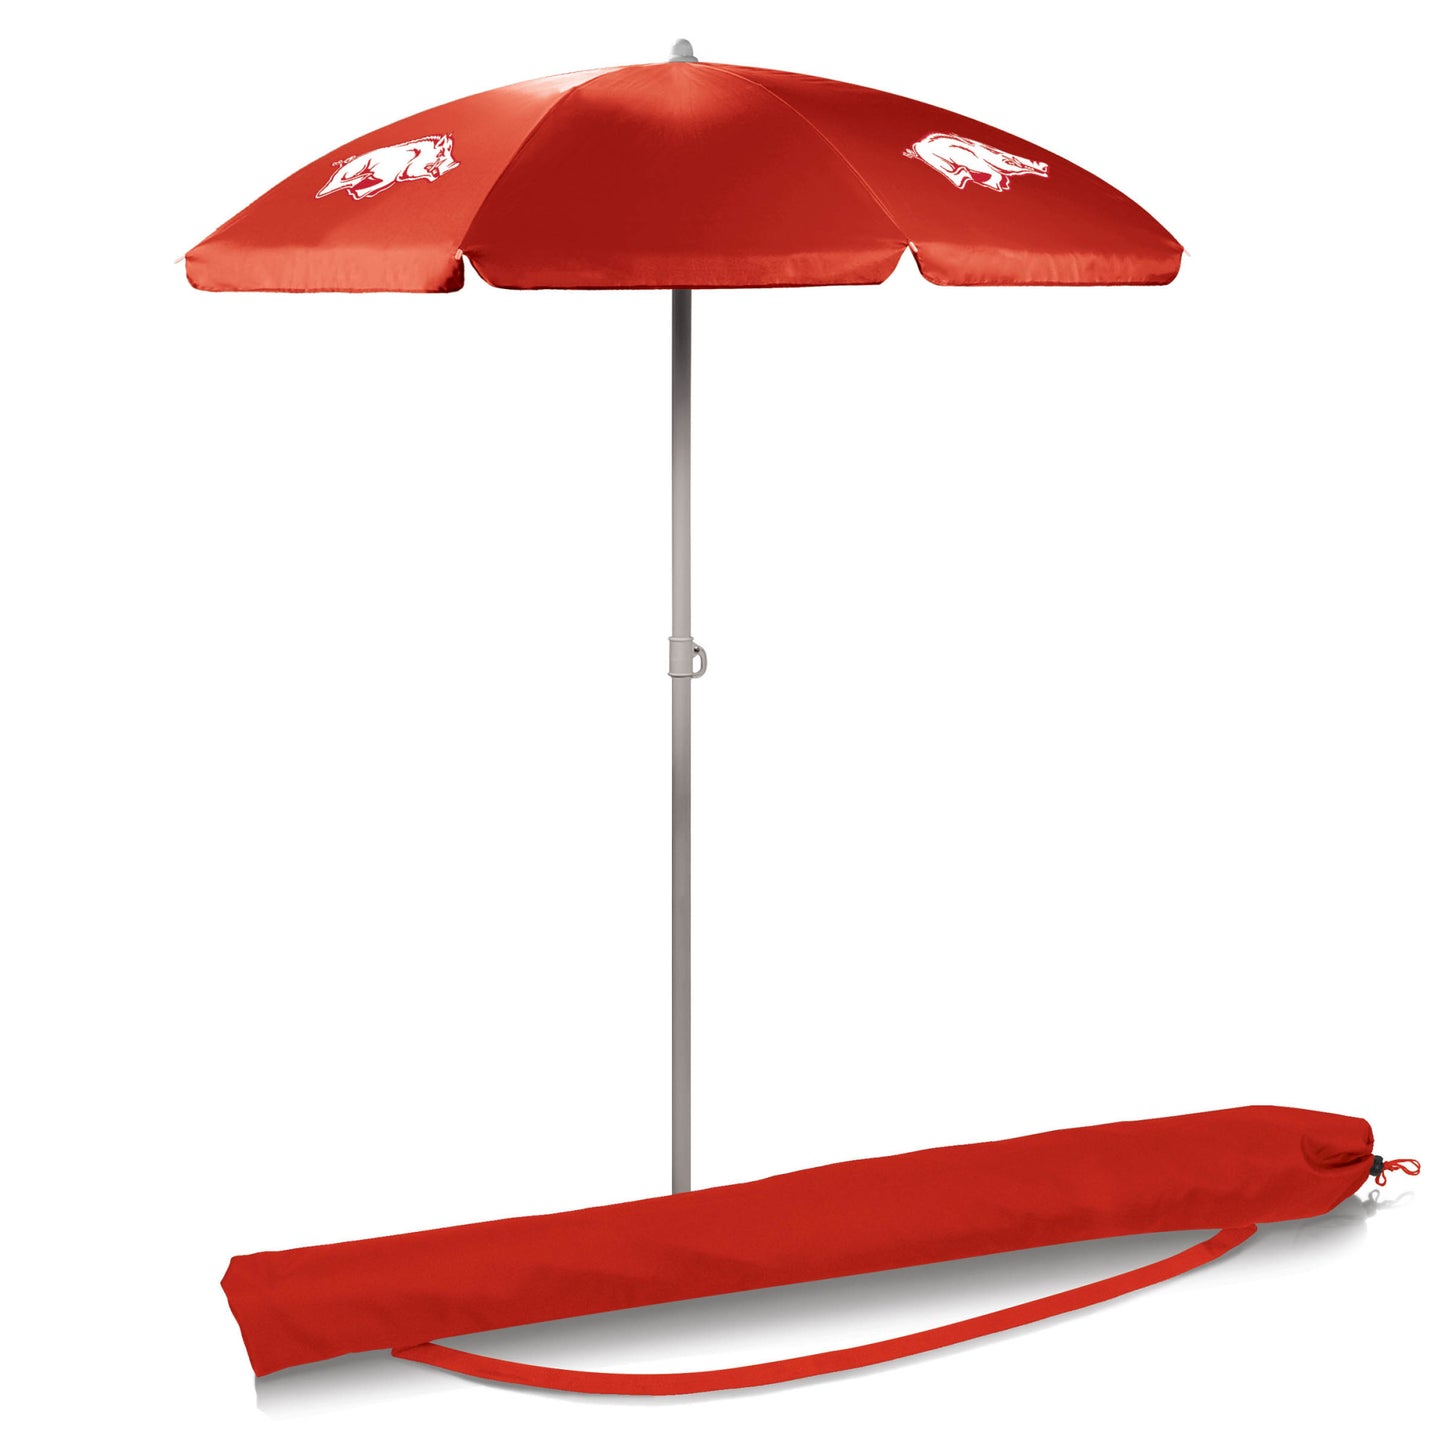 Arkansas Razorbacks 5.5' Portable Beach Umbrella by Picnic Time